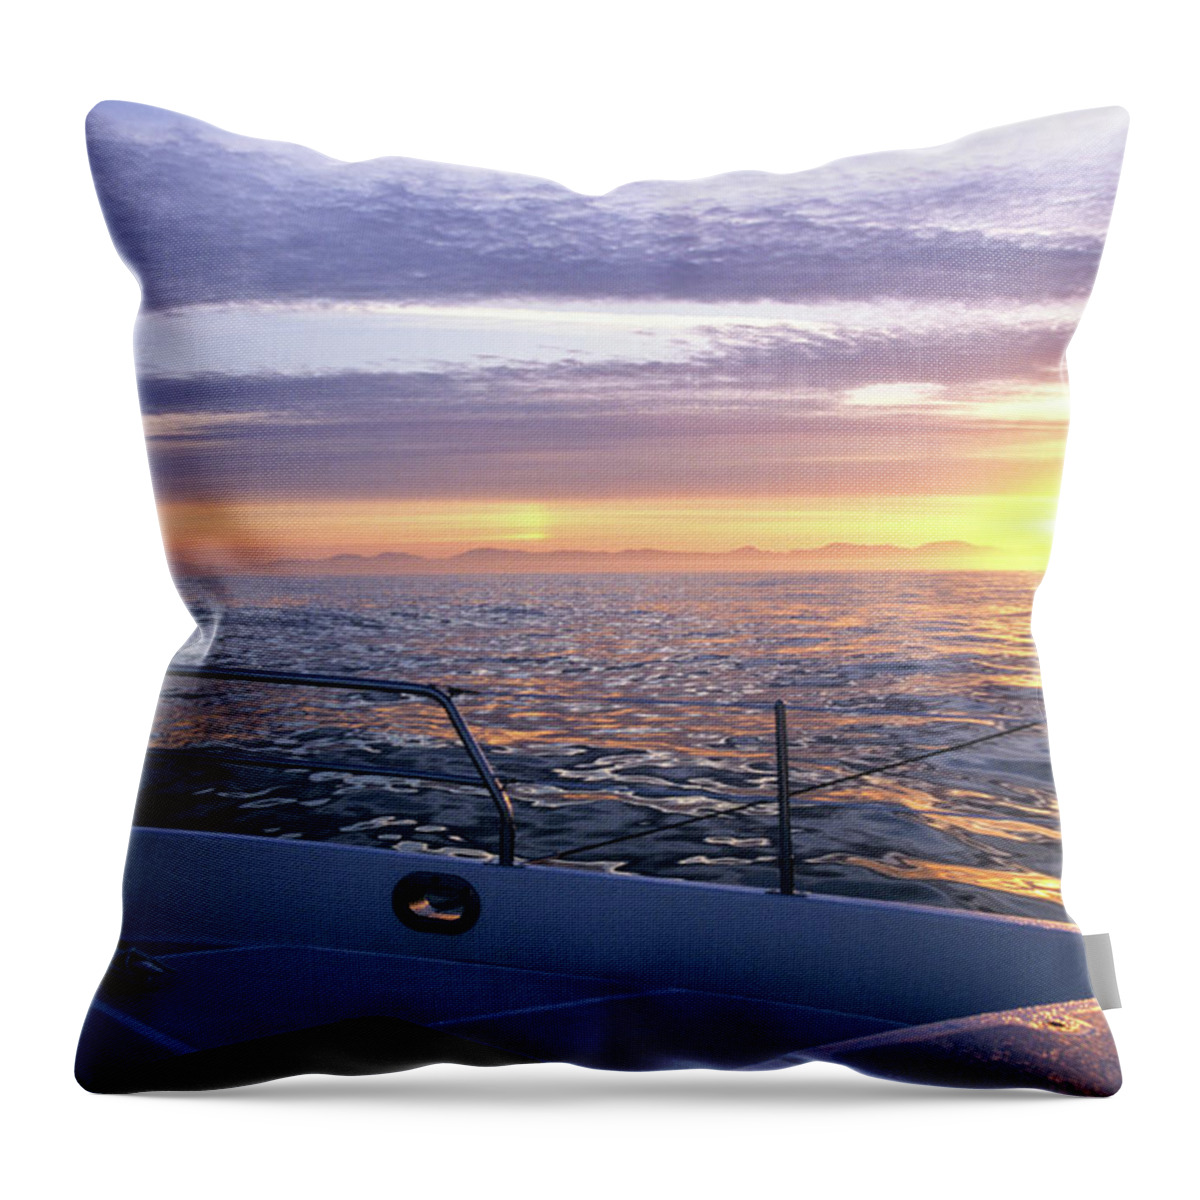 Marine Weather Throw Pillow featuring the photograph sunrise off Washington coast by David Shuler